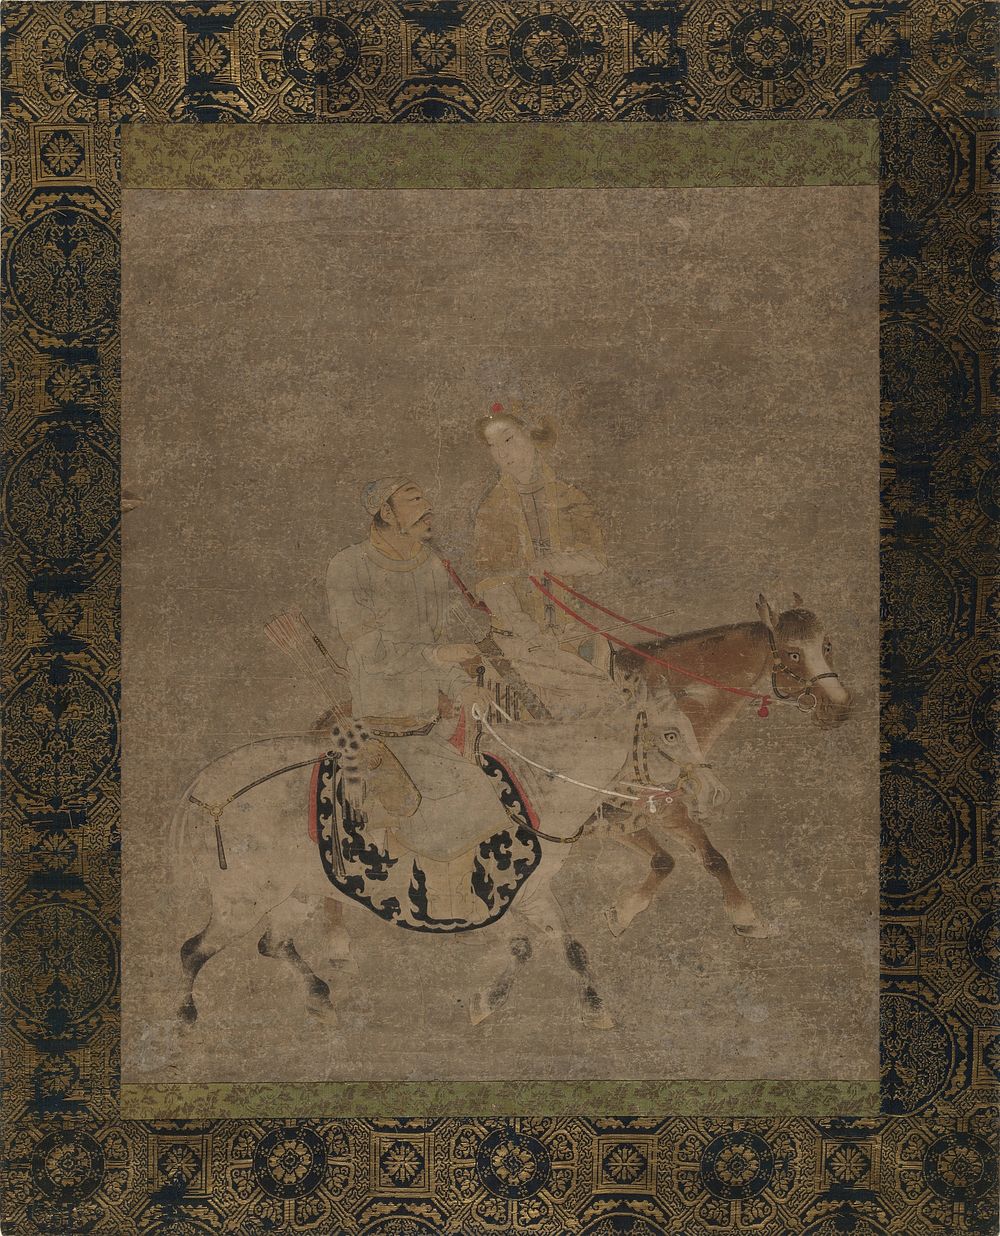 Man and Woman on Horseback